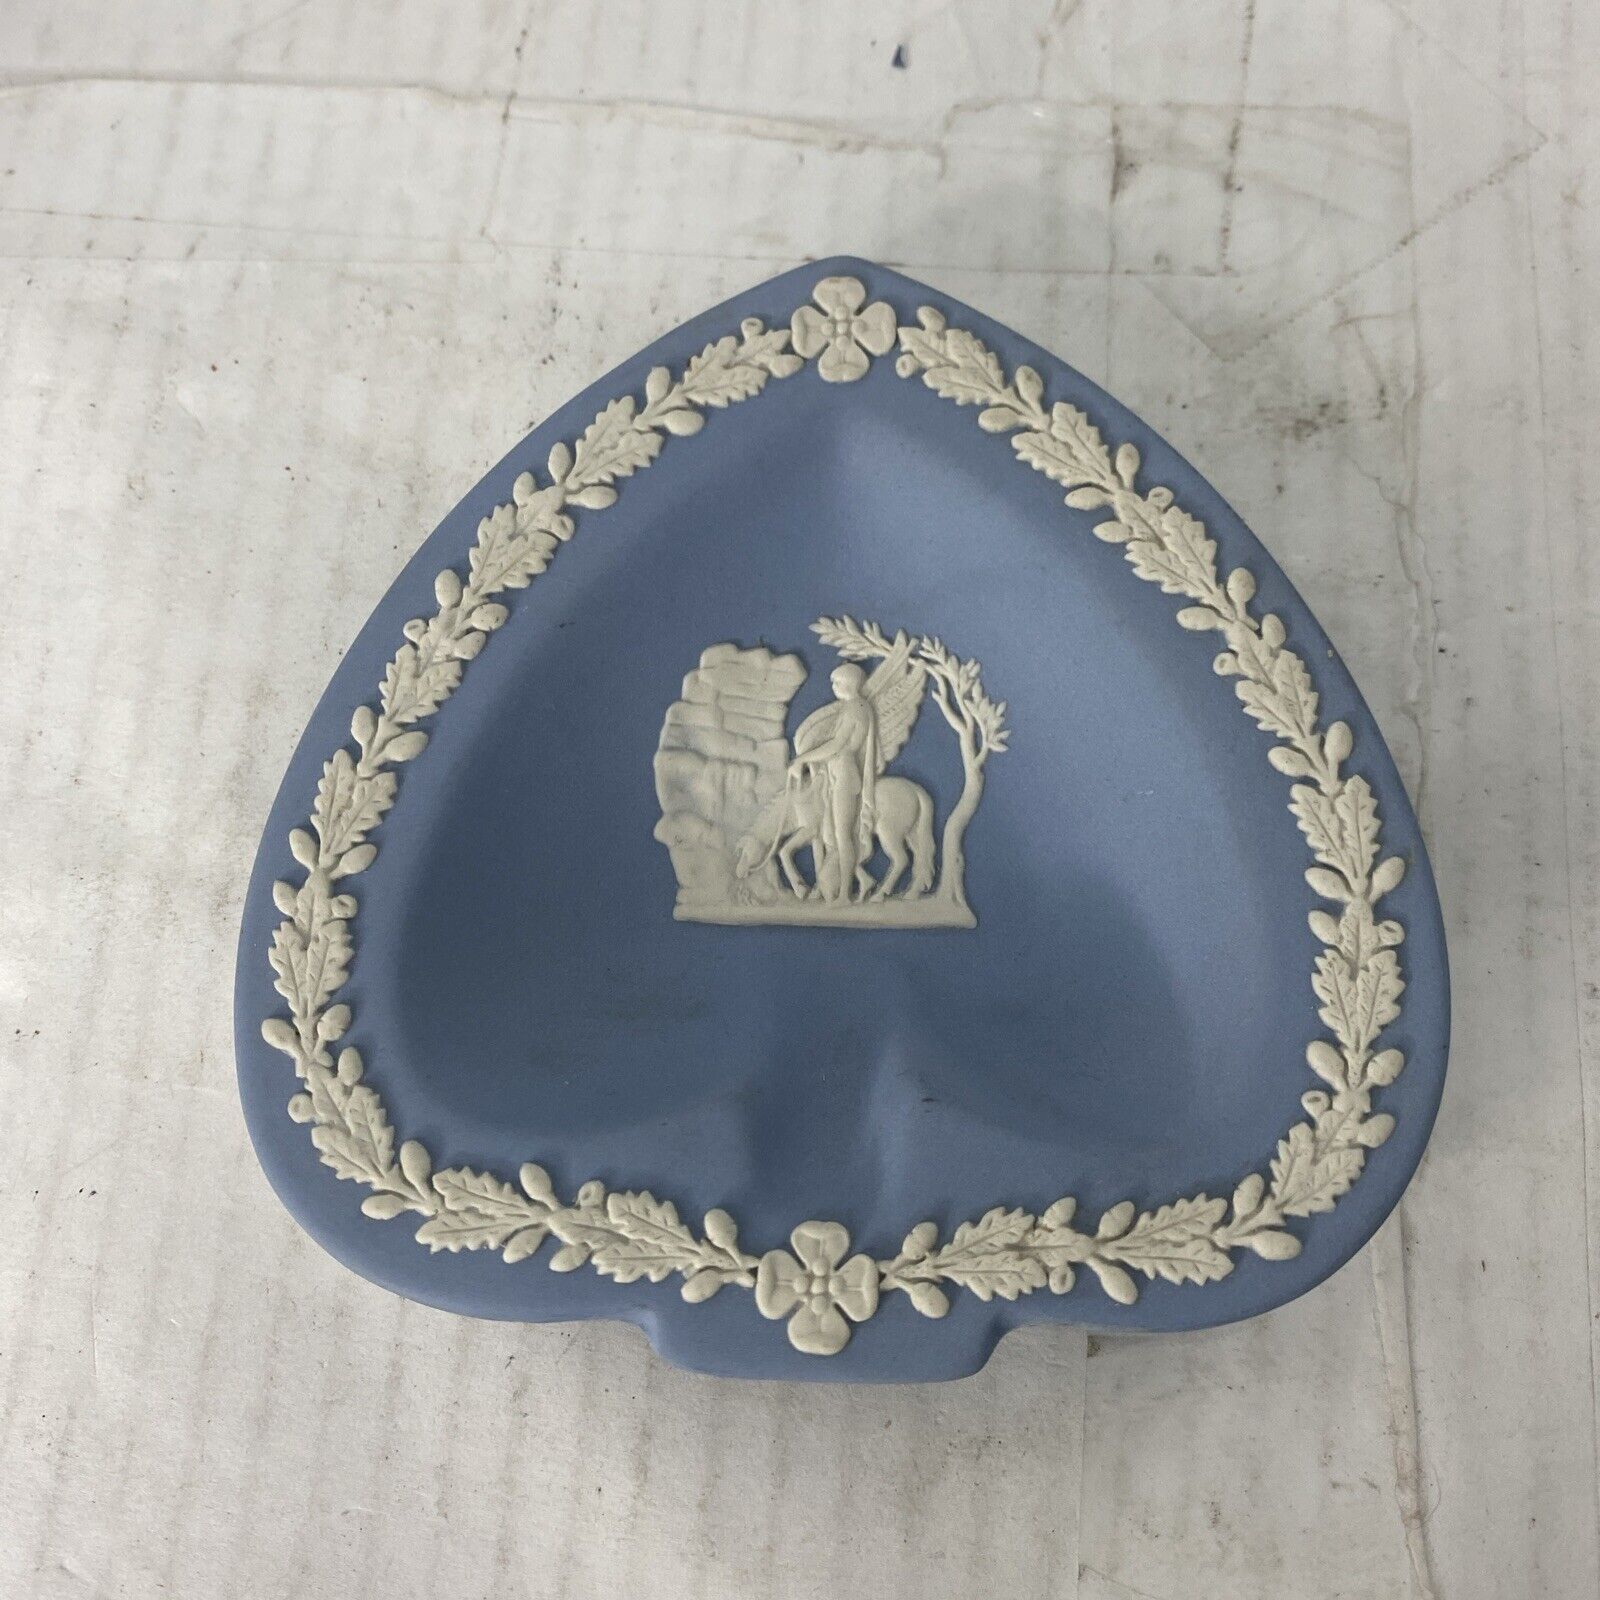 Vintage Wedgwood Jasperware Heart Shaped Dish 4.5” X 4.5” light blue English